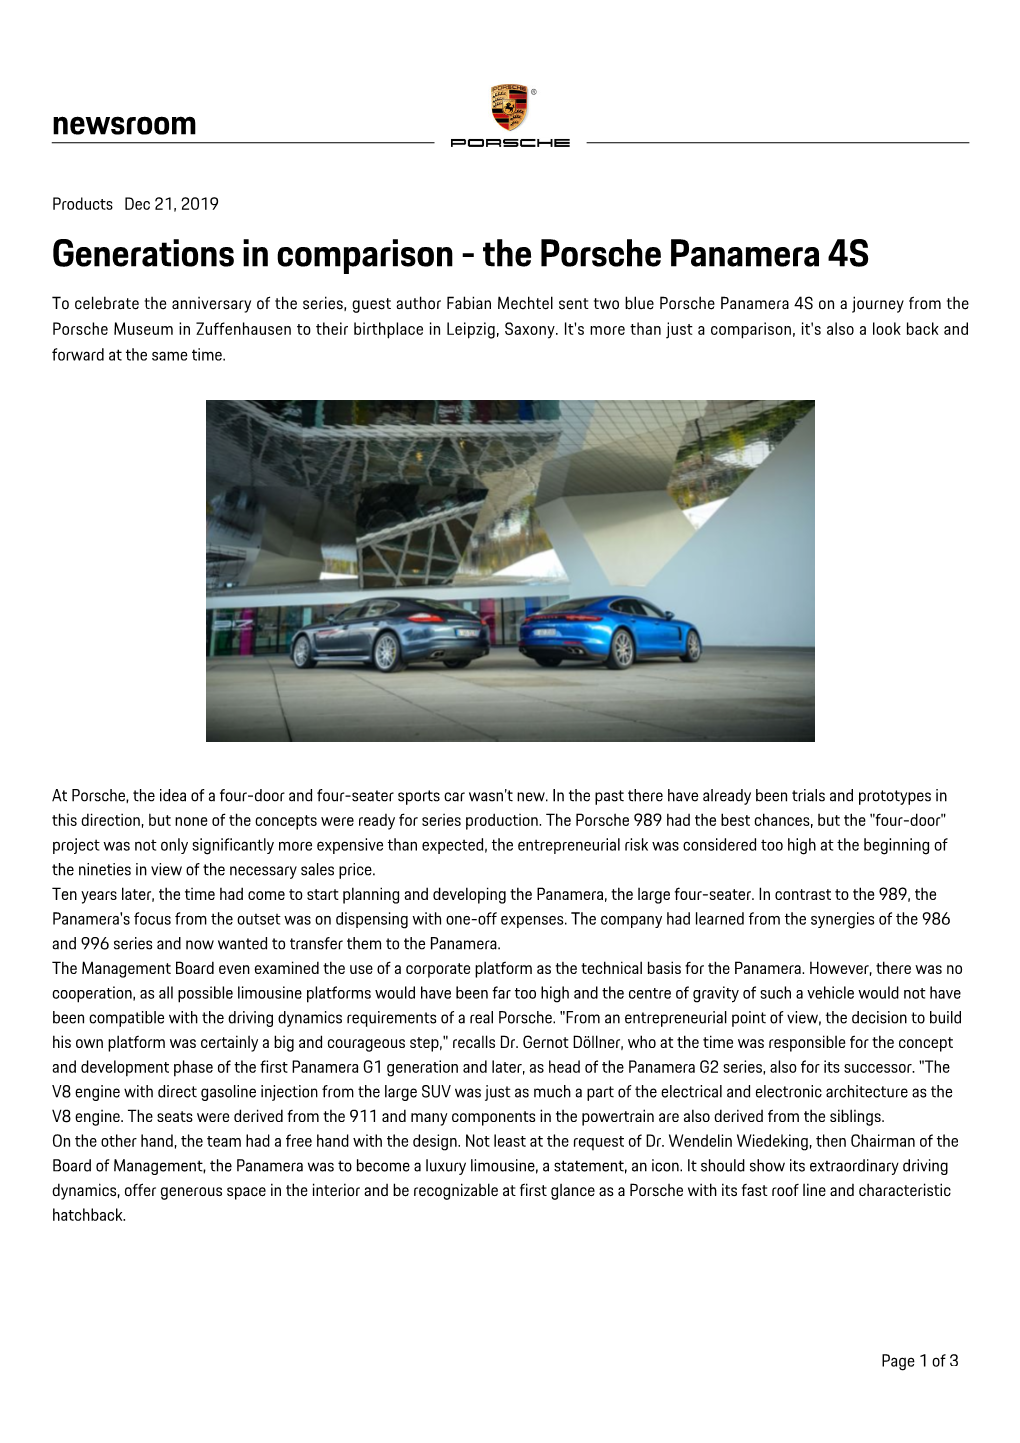 The Porsche Panamera 4S